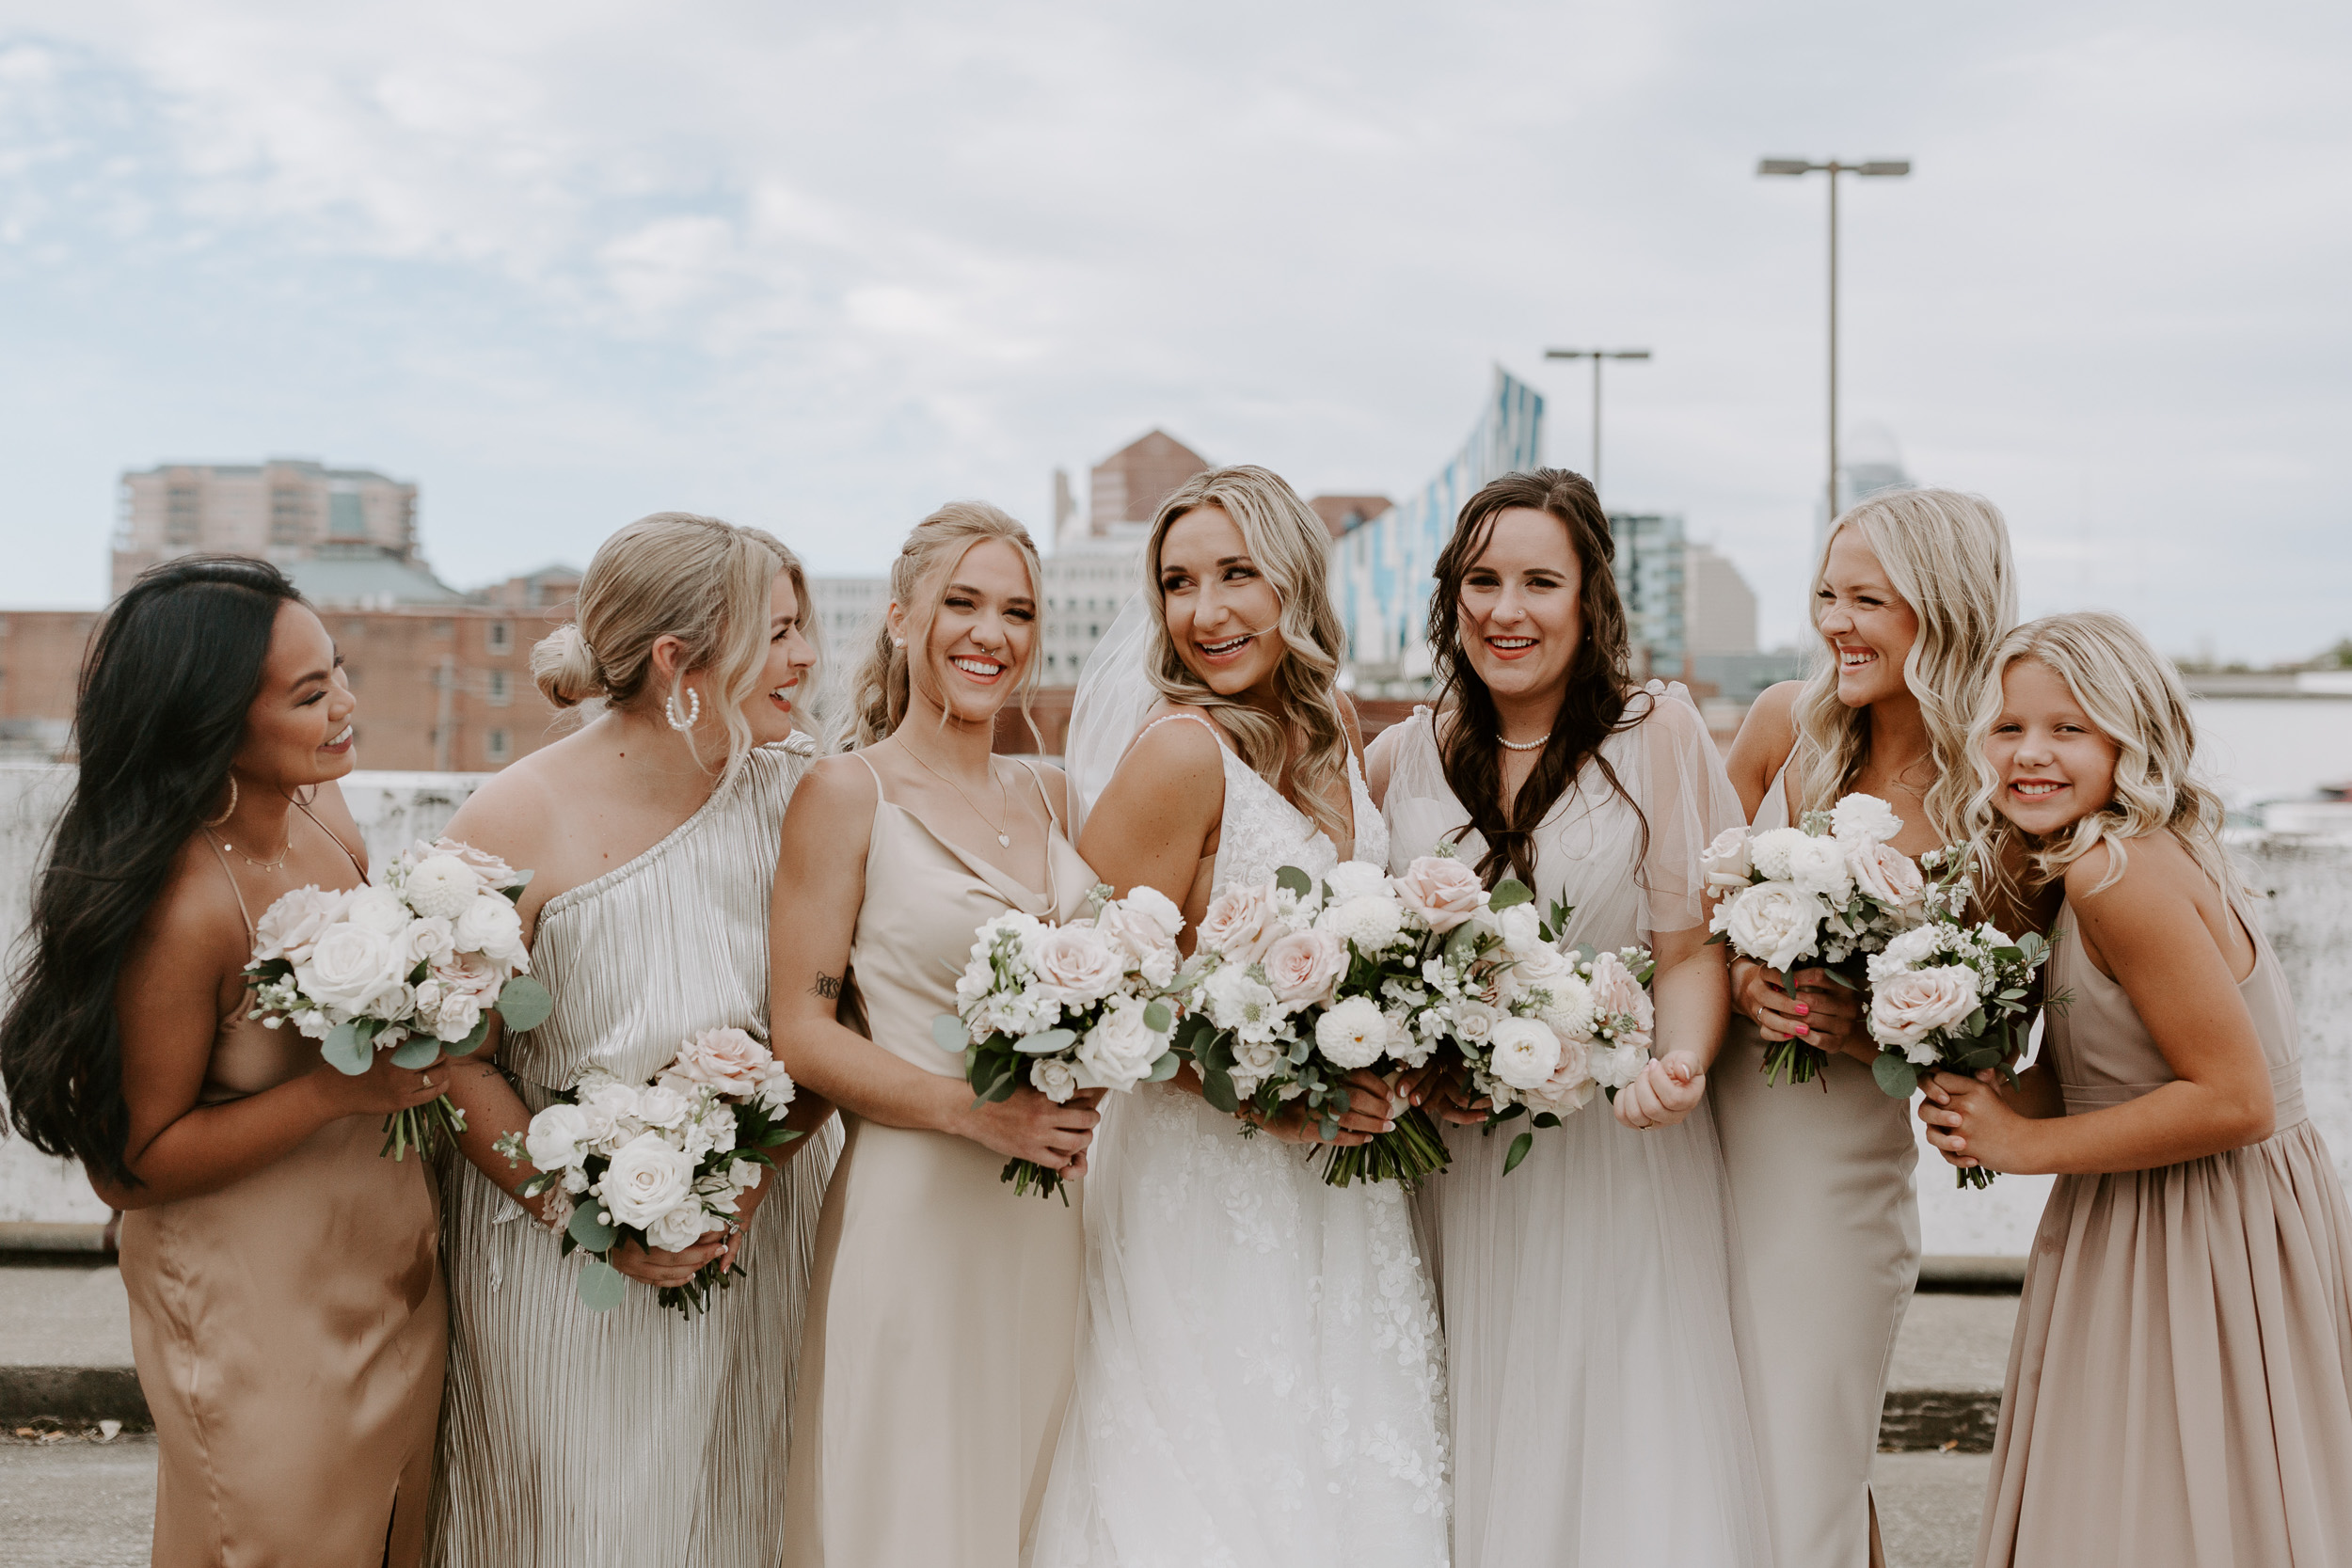 Riverfront bridal party photos with bridesmaids in Covington, Kentucky